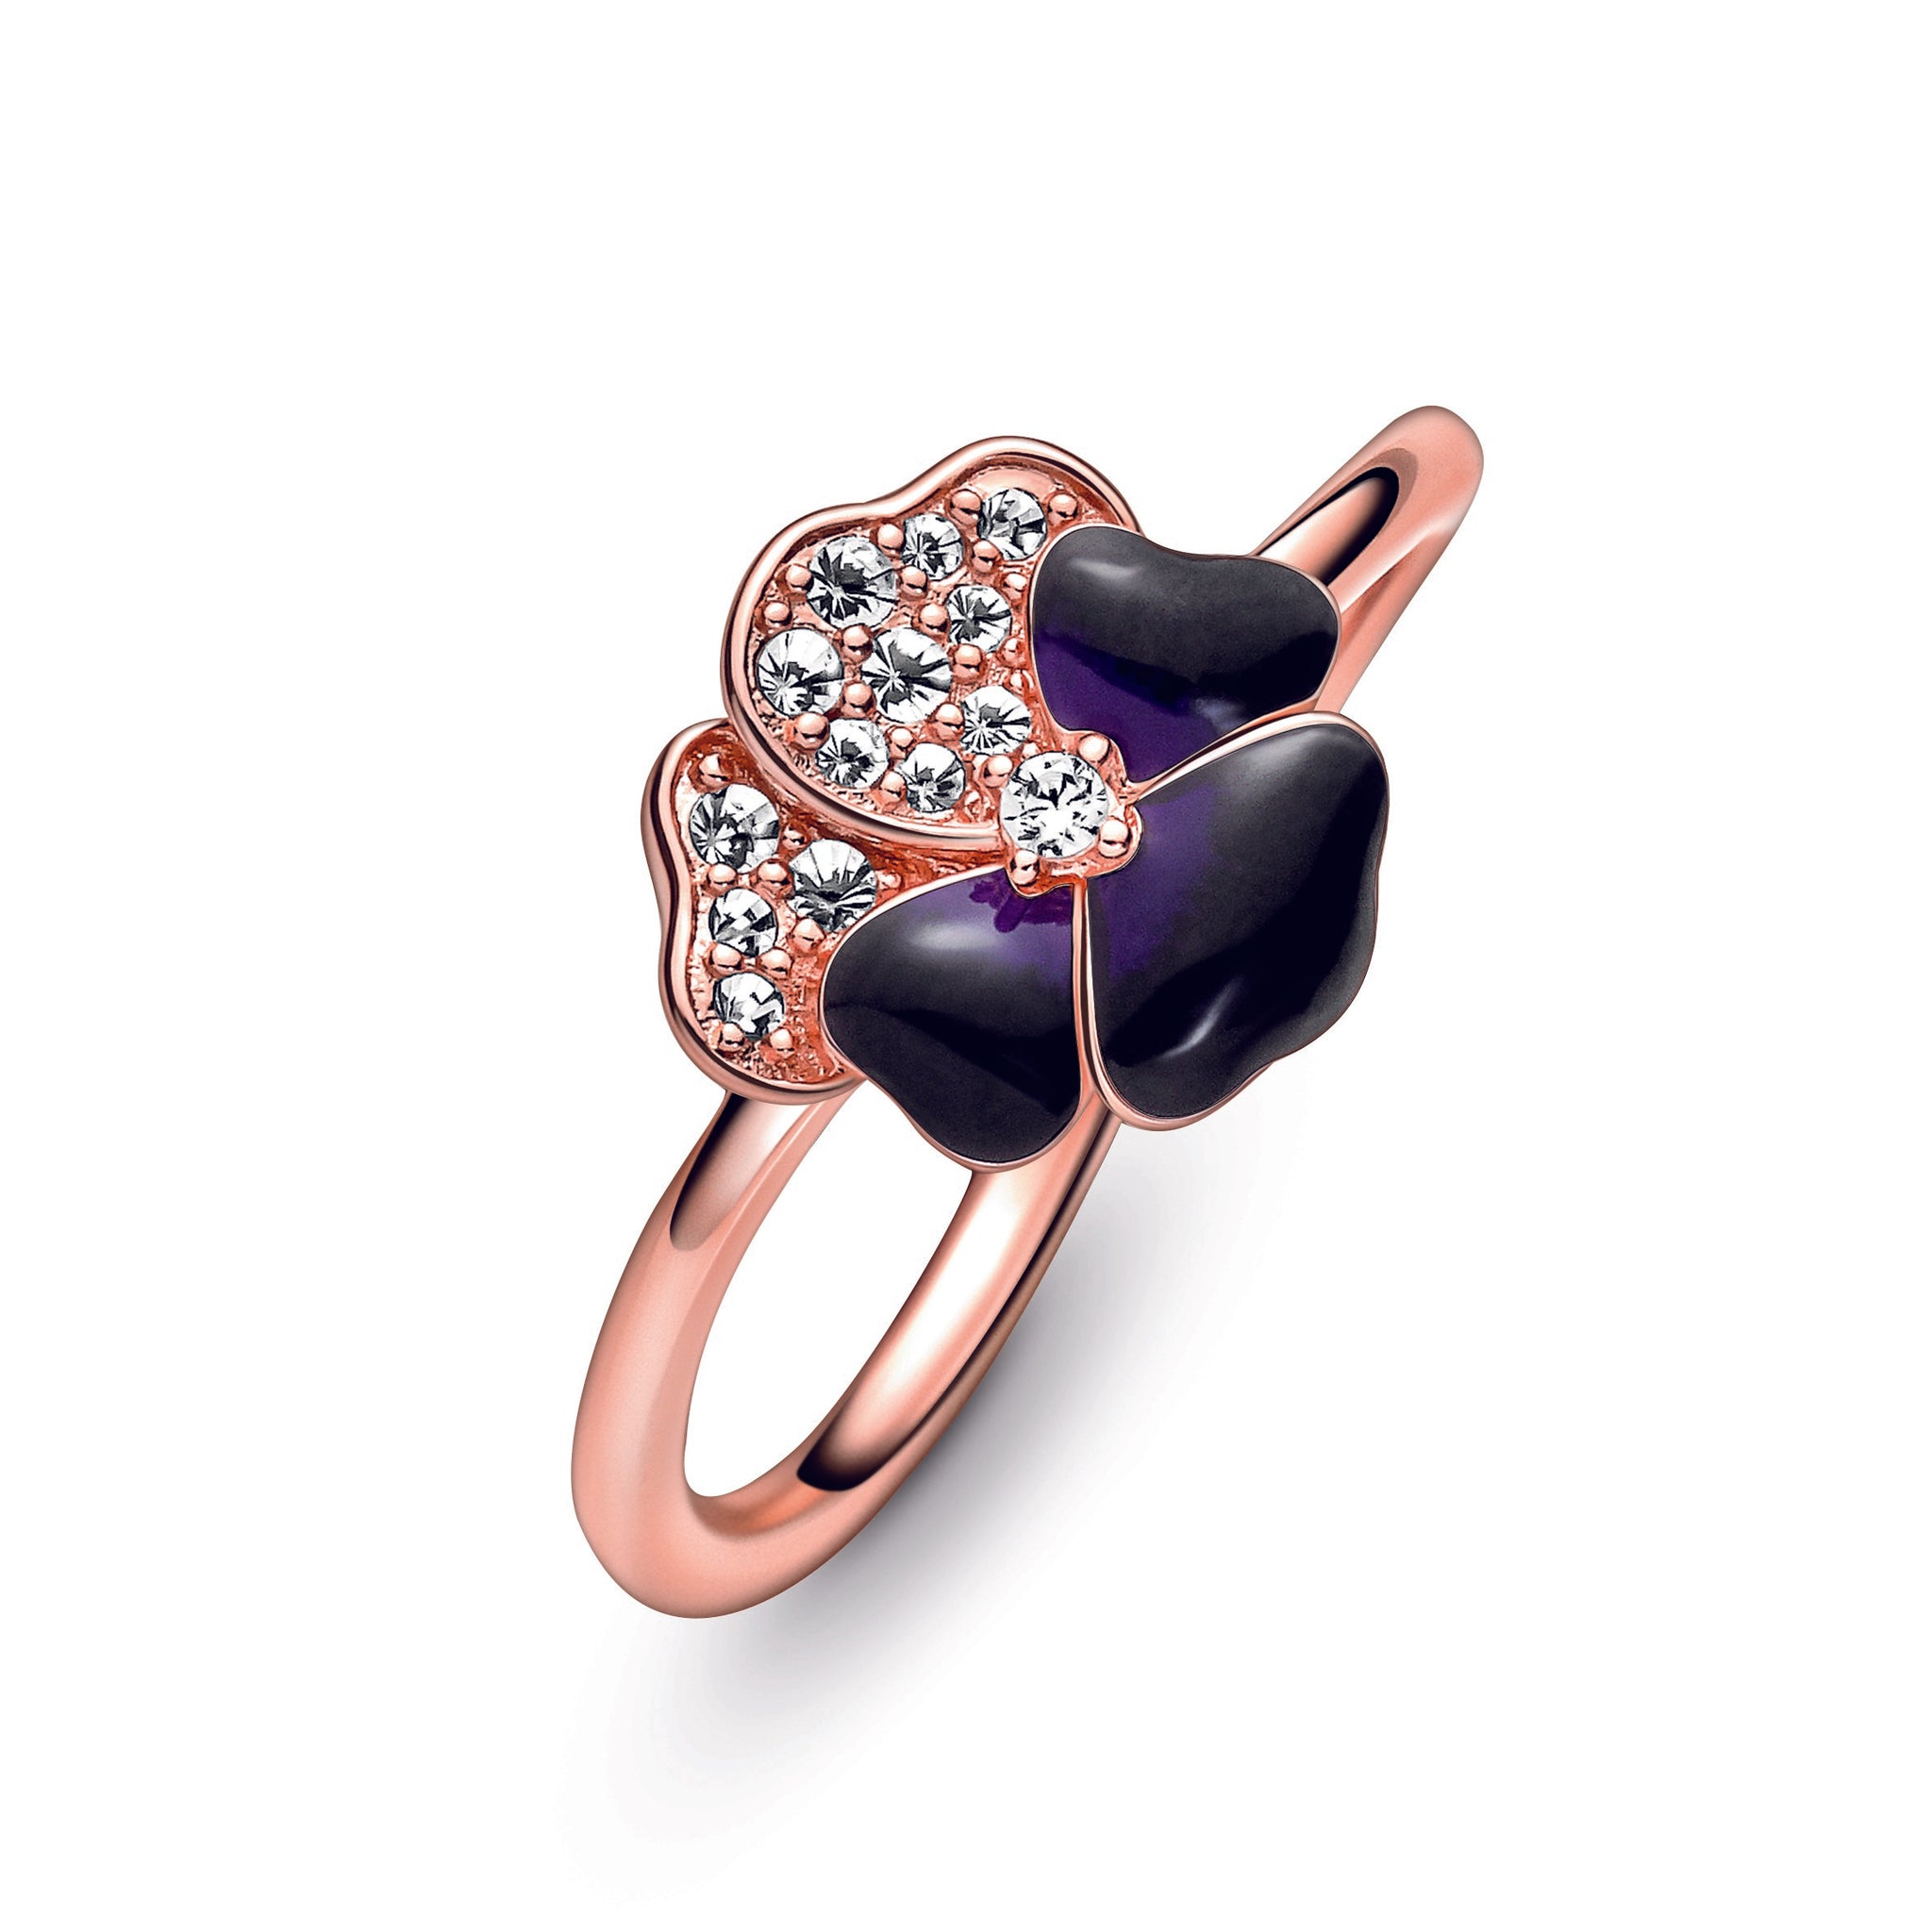 Buy Silverrazzi 925 Sterling Silver Oxidised Purple Amethyst Ring | Rings  for Women & Girls(Size 10) at Amazon.in